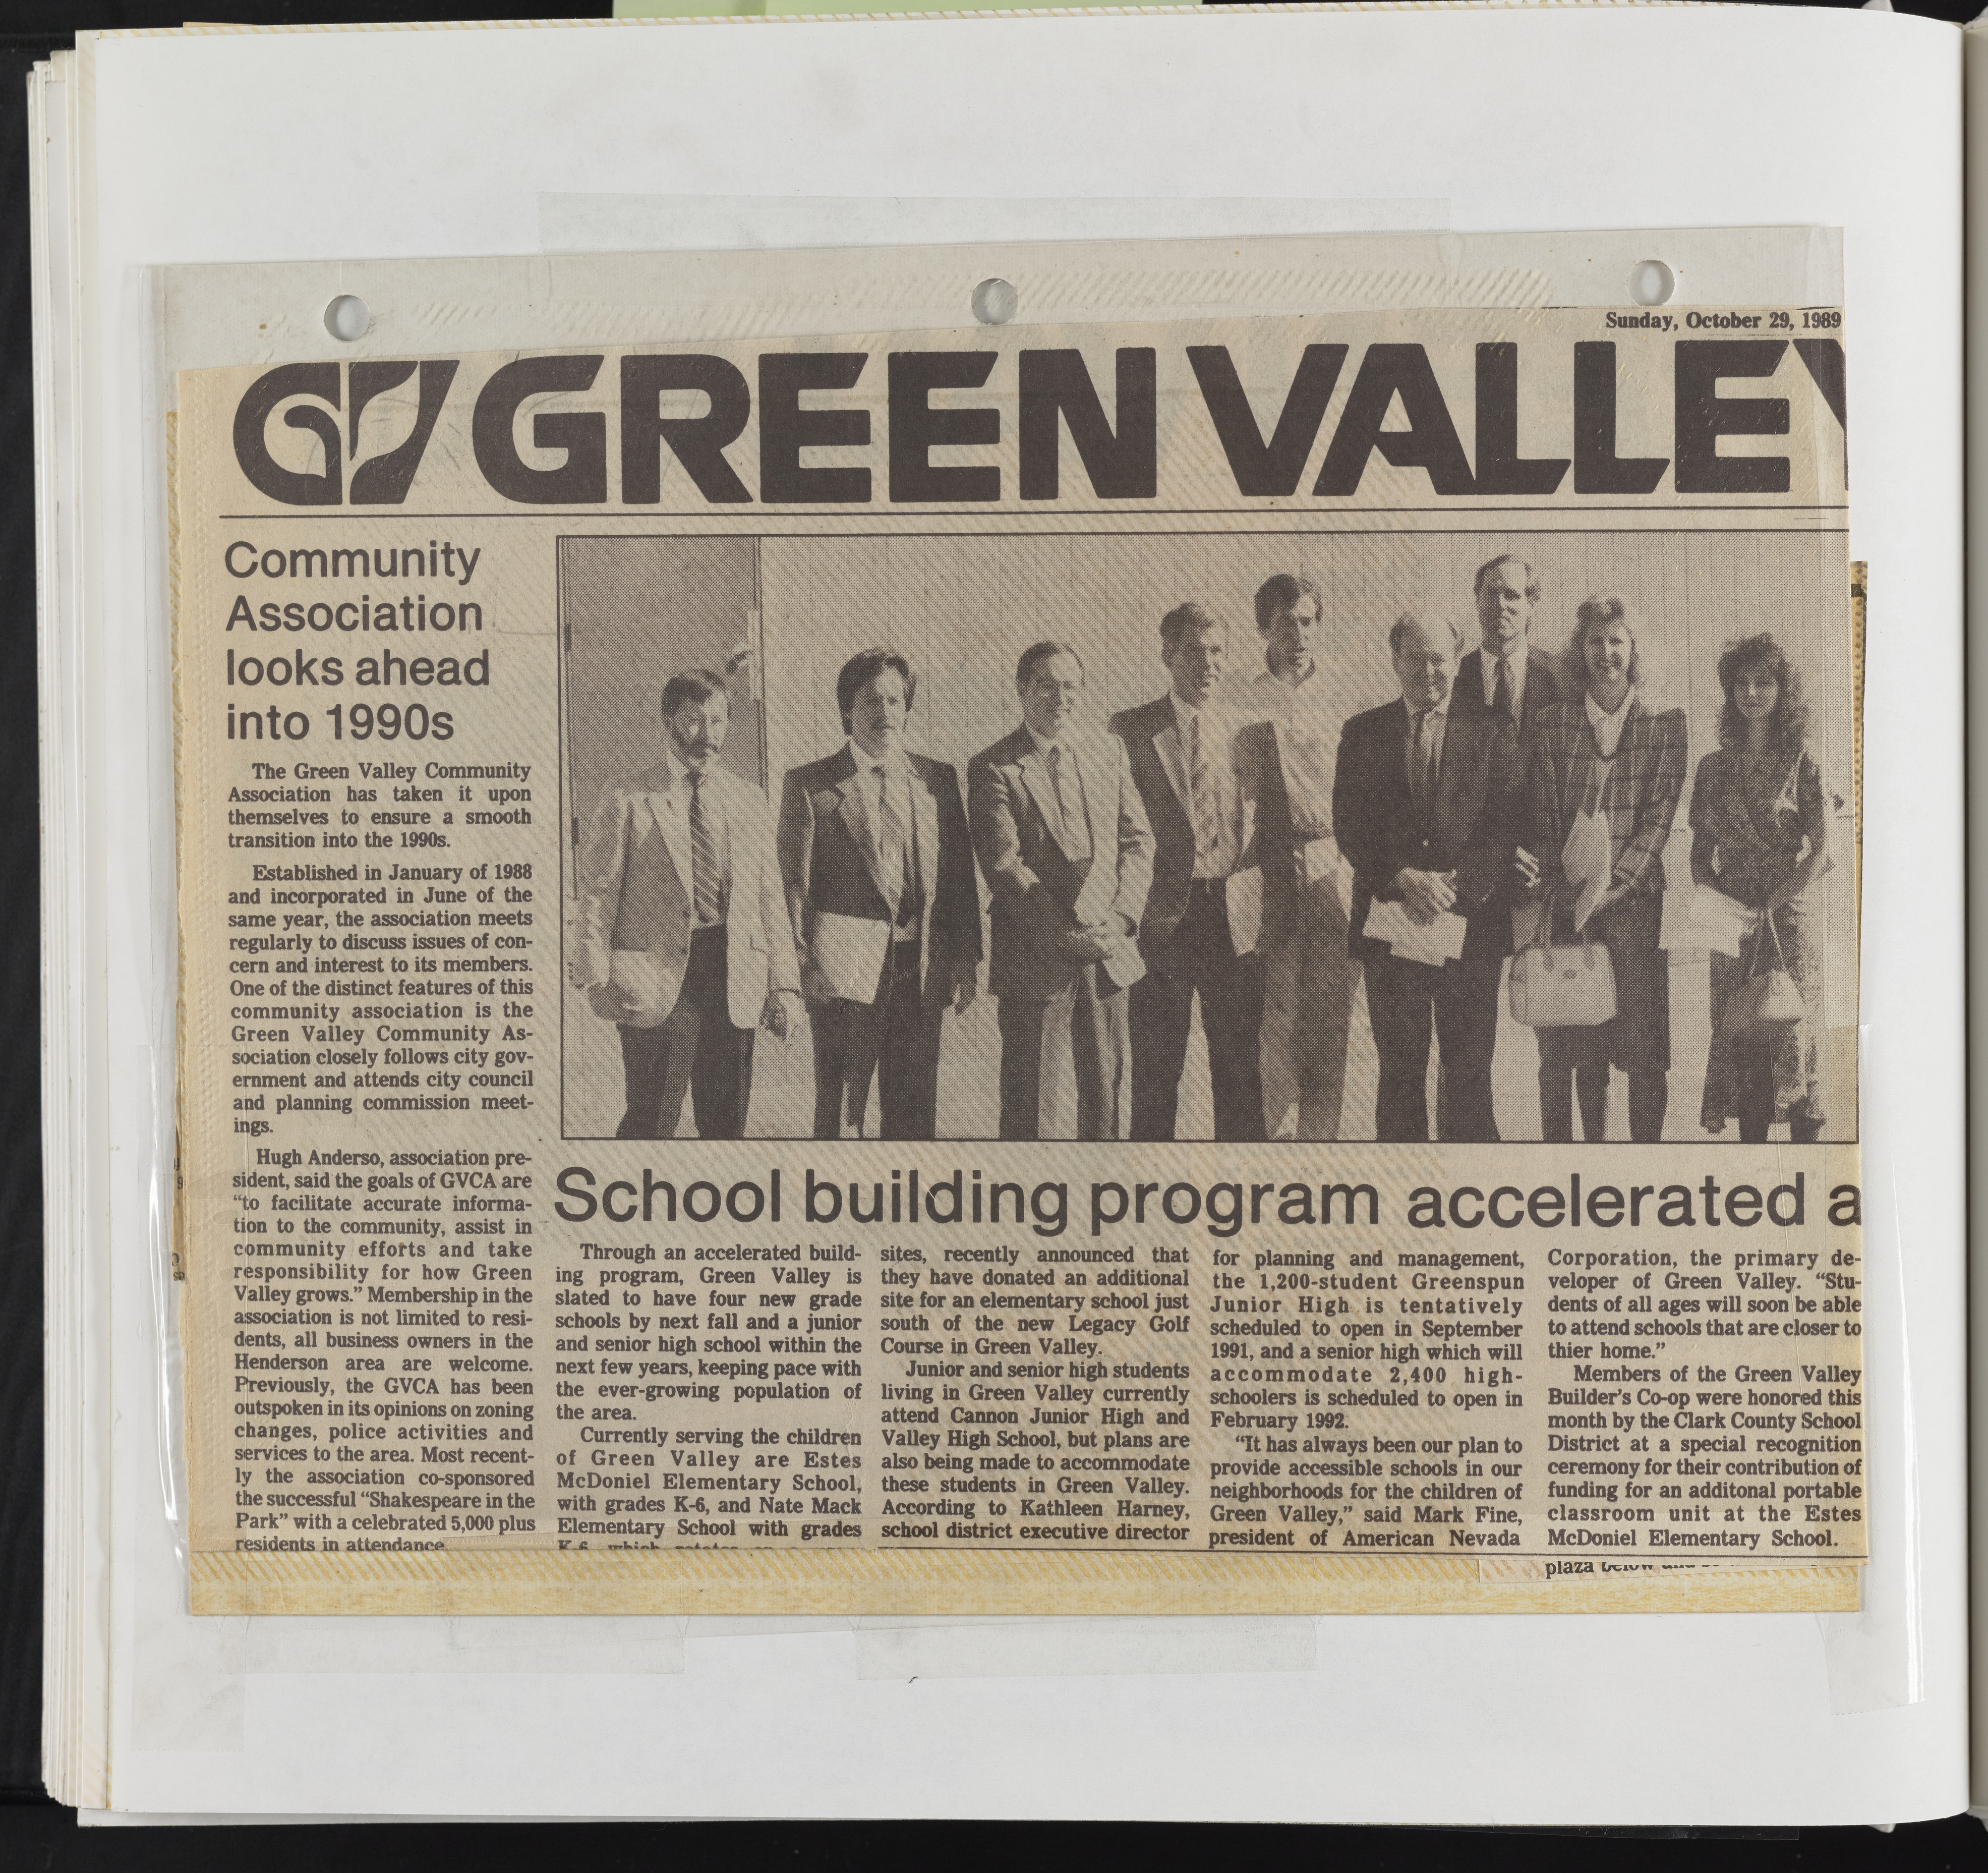 Newspaper clipping, Community Association looks ahead into 1990s, Las Vegas Sun, October 29, 1989